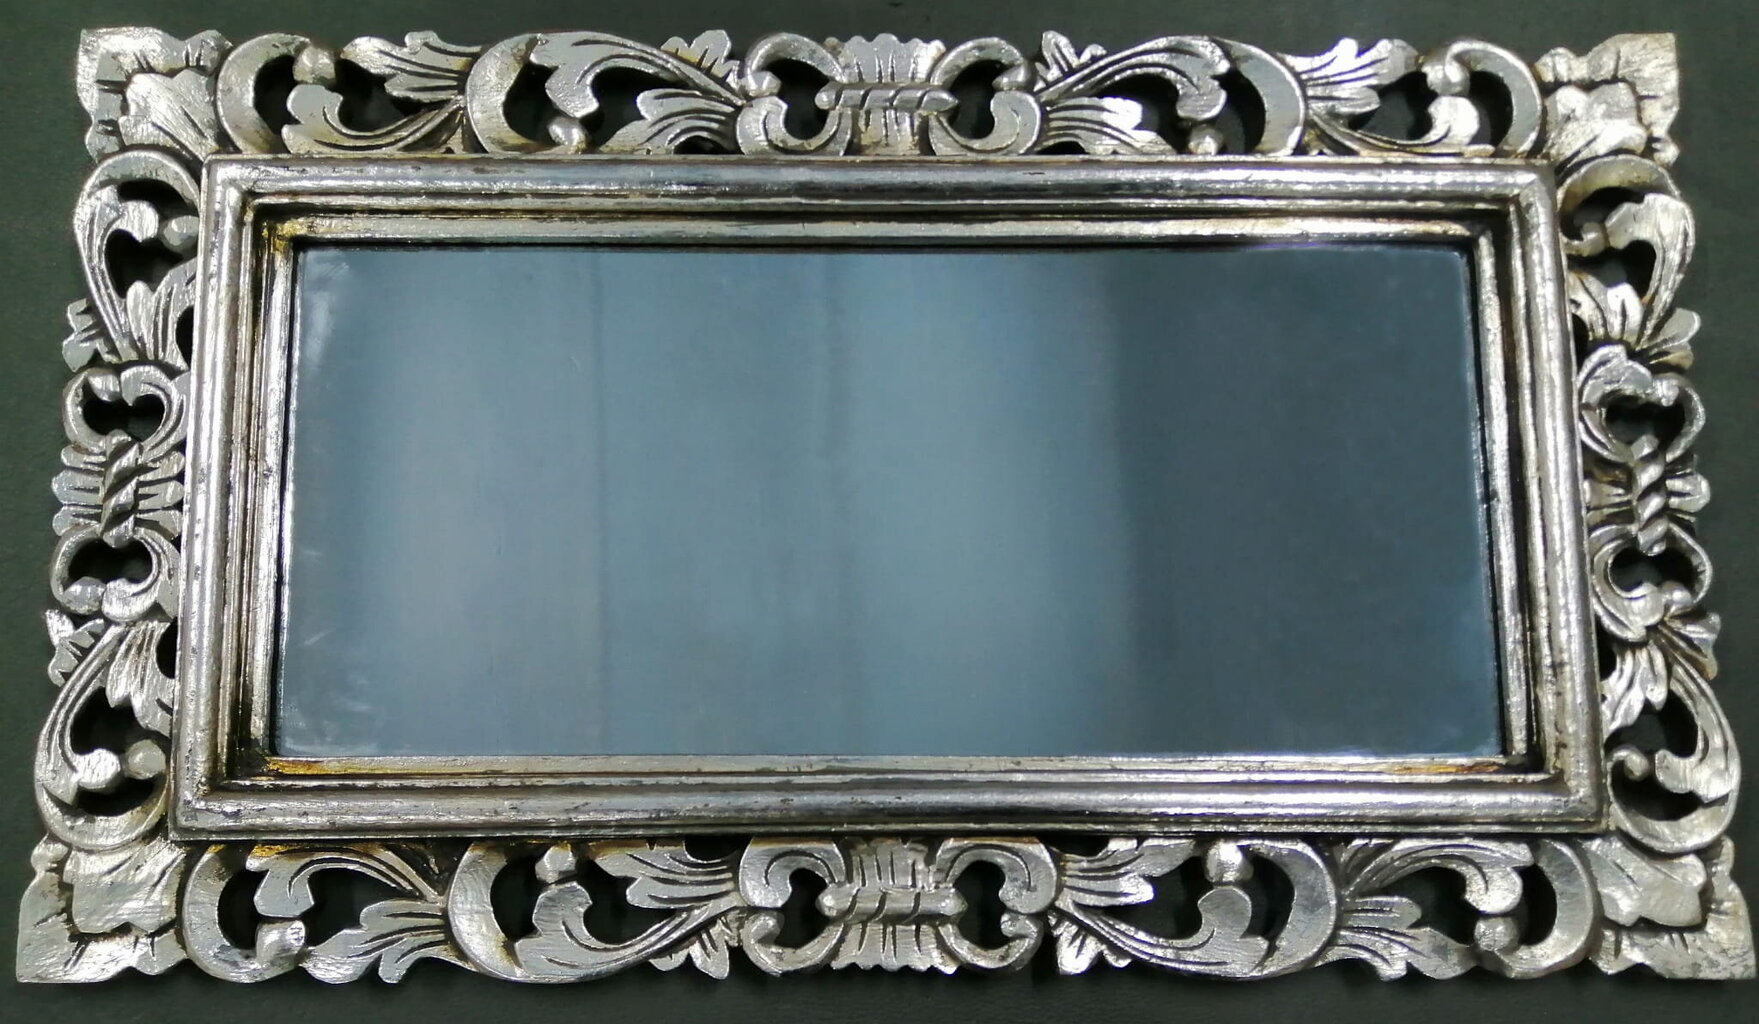 Rankomis raižytas vonios veidrodis mediniais rėmais, 80 x 120 cm, SAMBLUNG, sidabrinis kaina ir informacija | Vonios veidrodžiai | pigu.lt